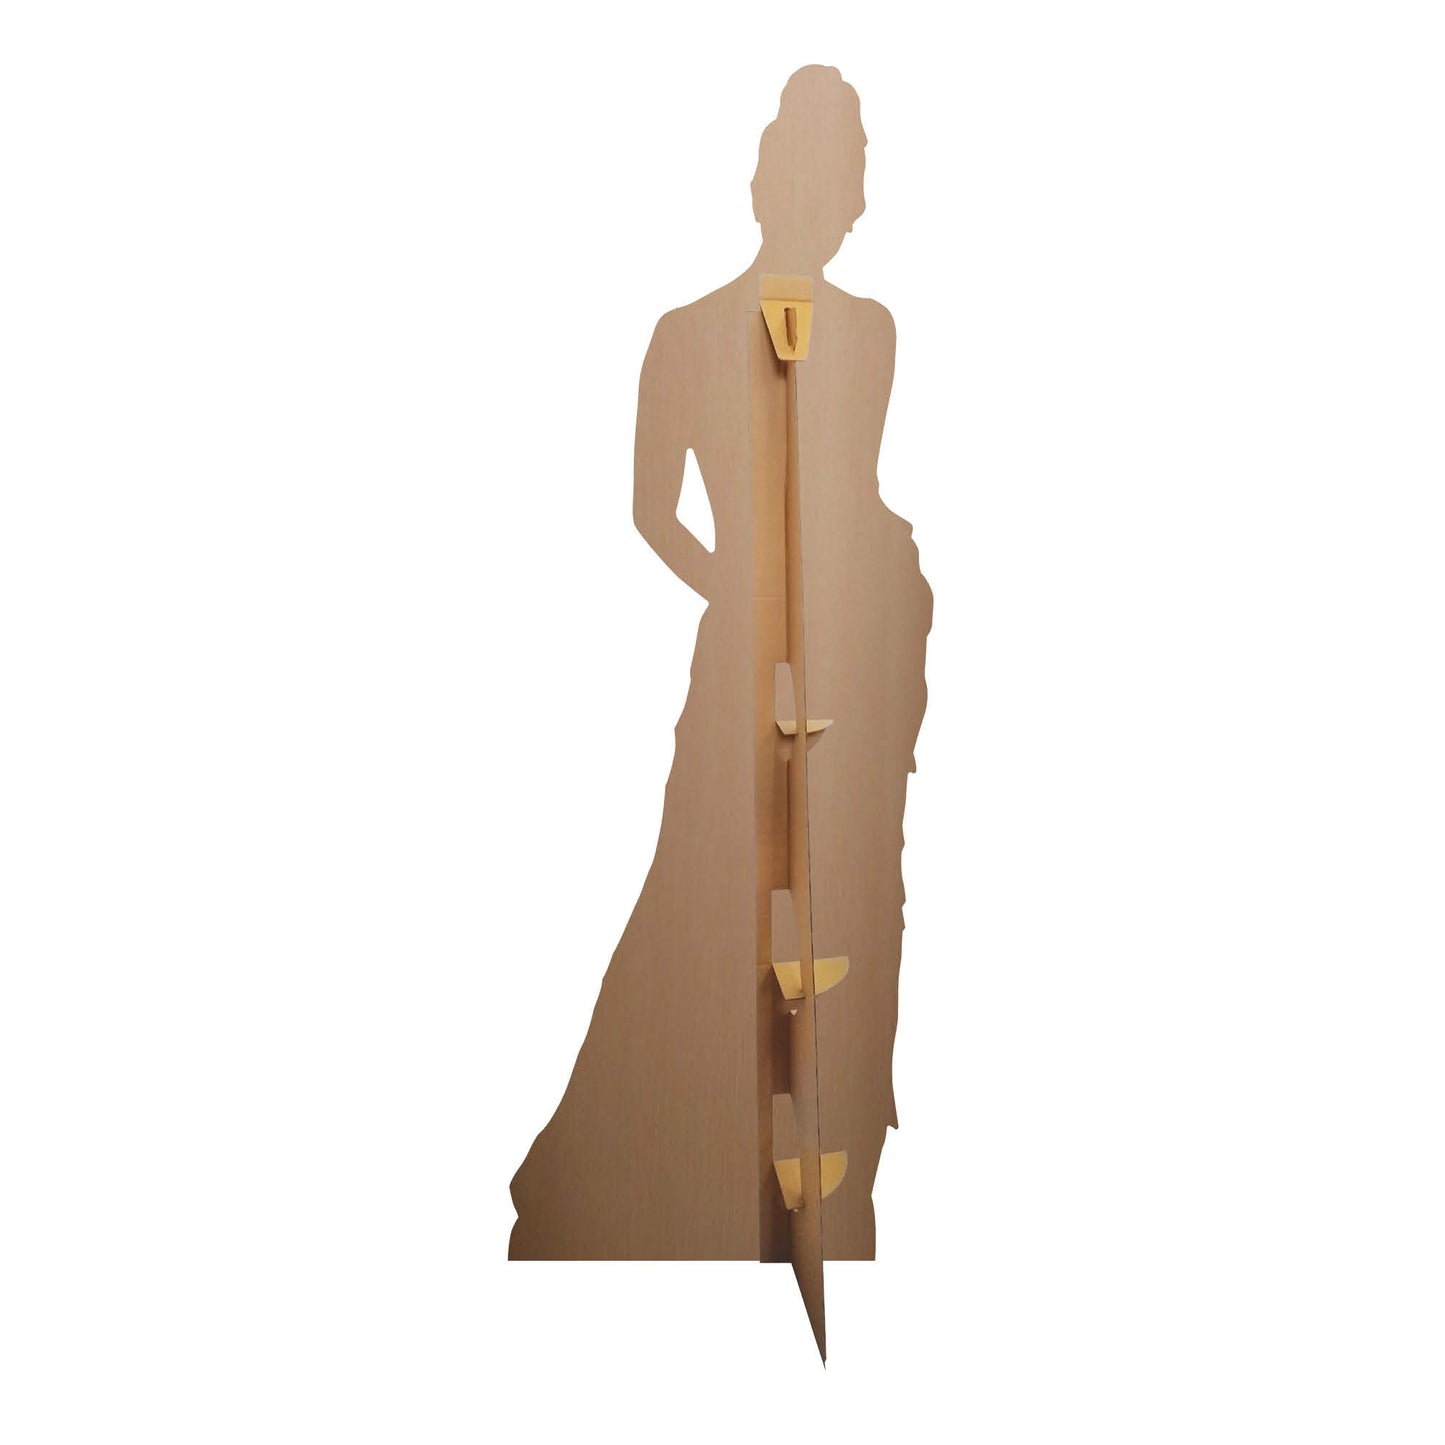 CS1167 Deepika Padukone Dress Height 178cm Cardboard Cutout